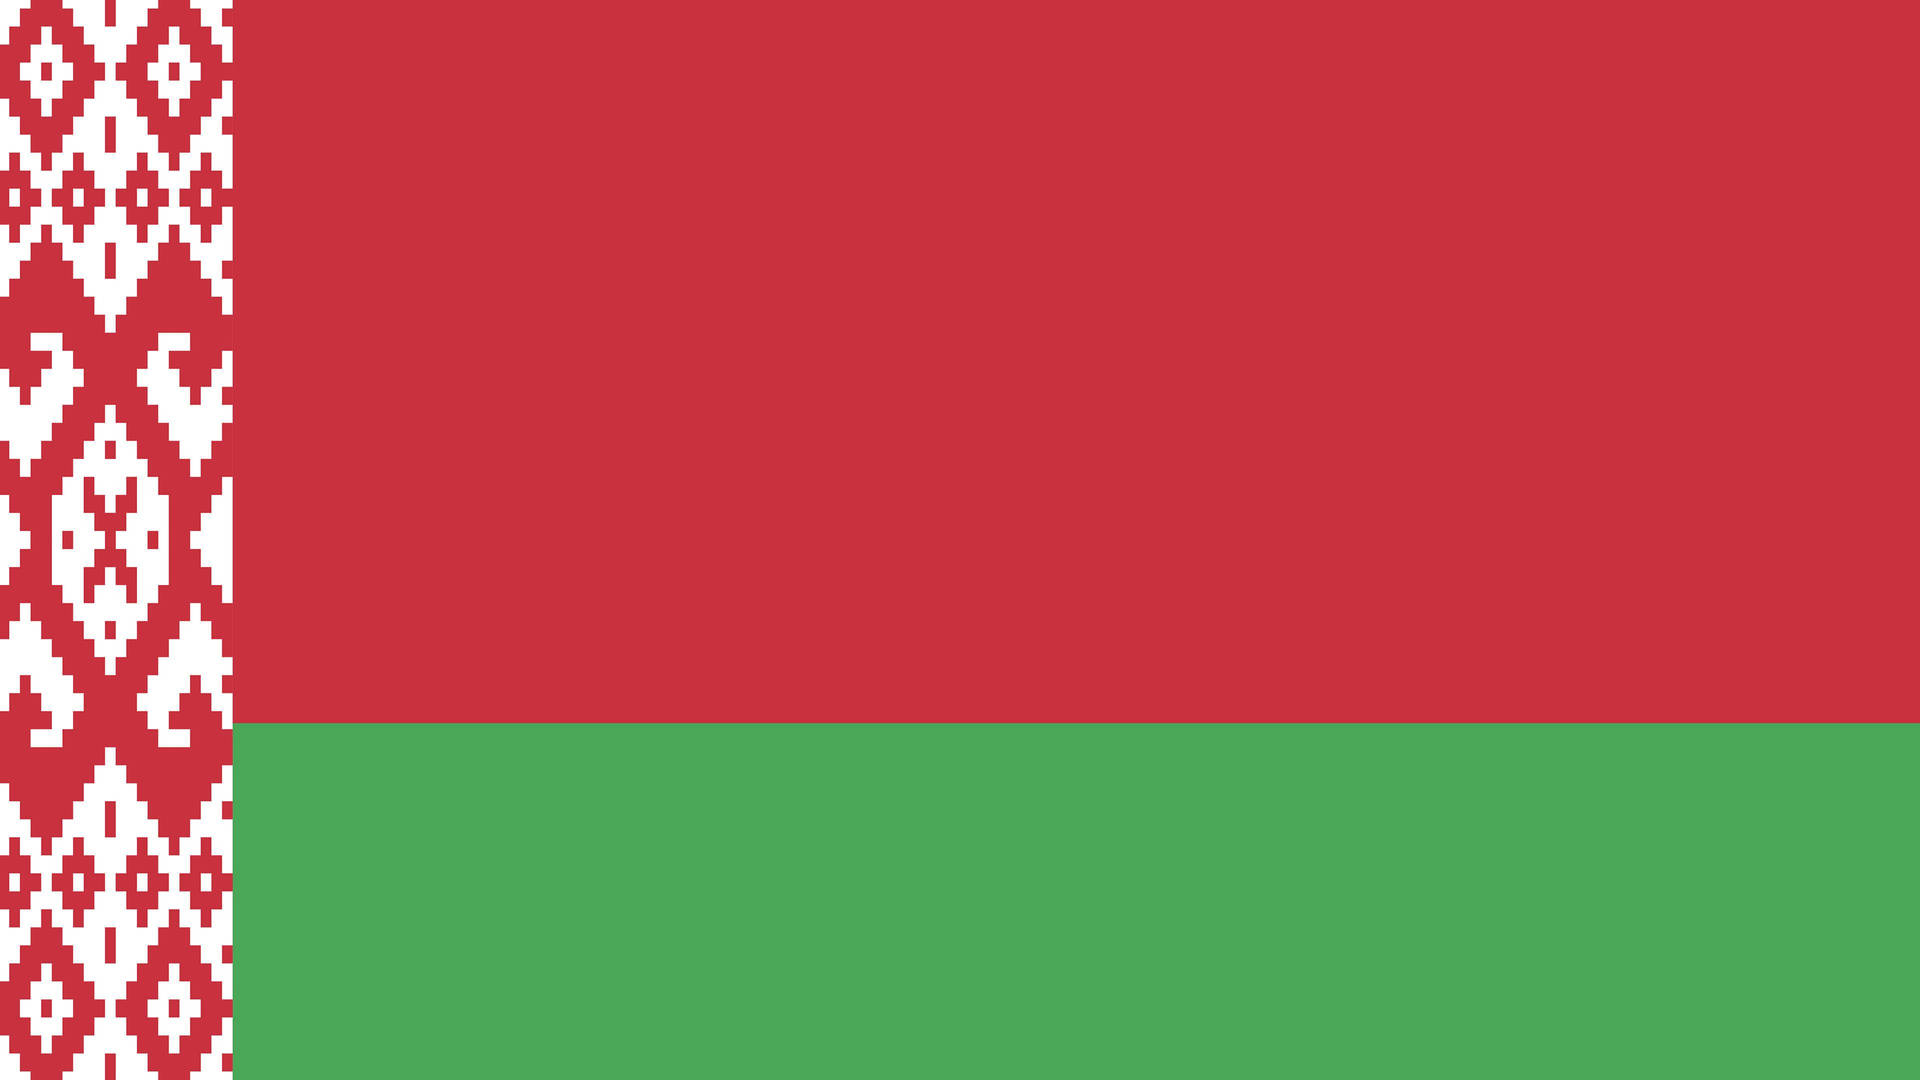 Simple Faded Belarus Flag Background